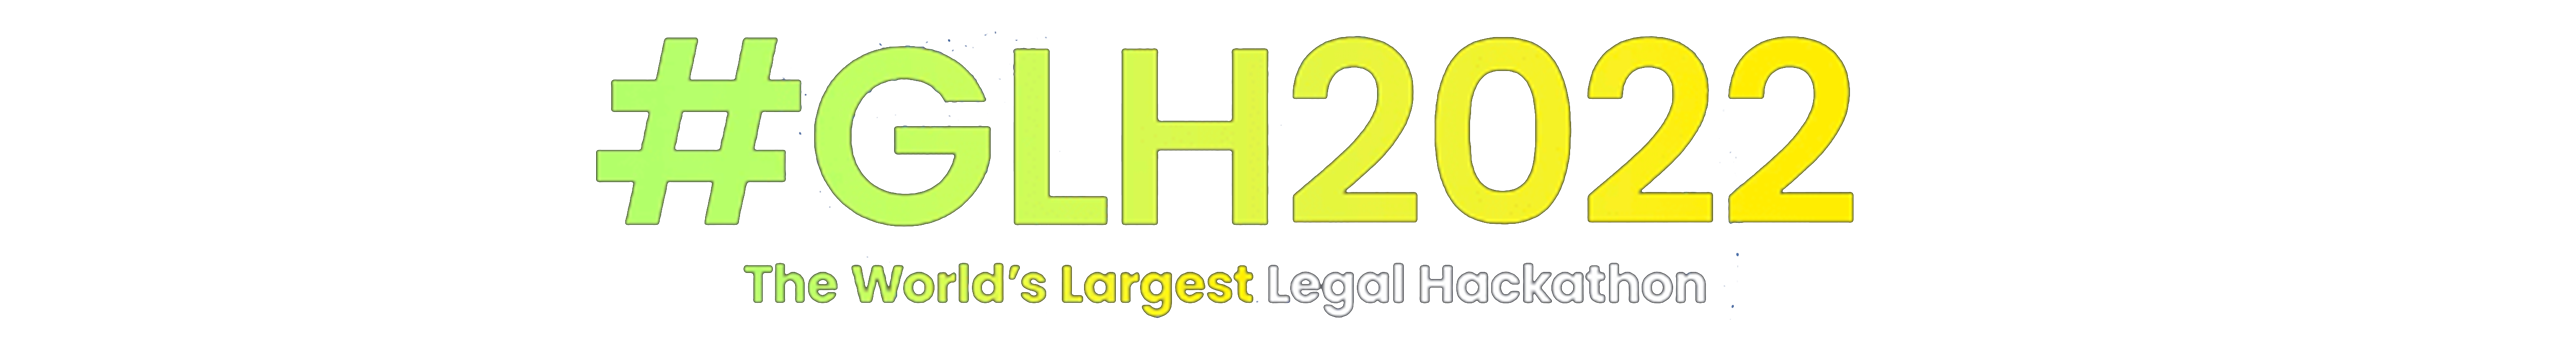 Global Legal Hackathon 2022 image title